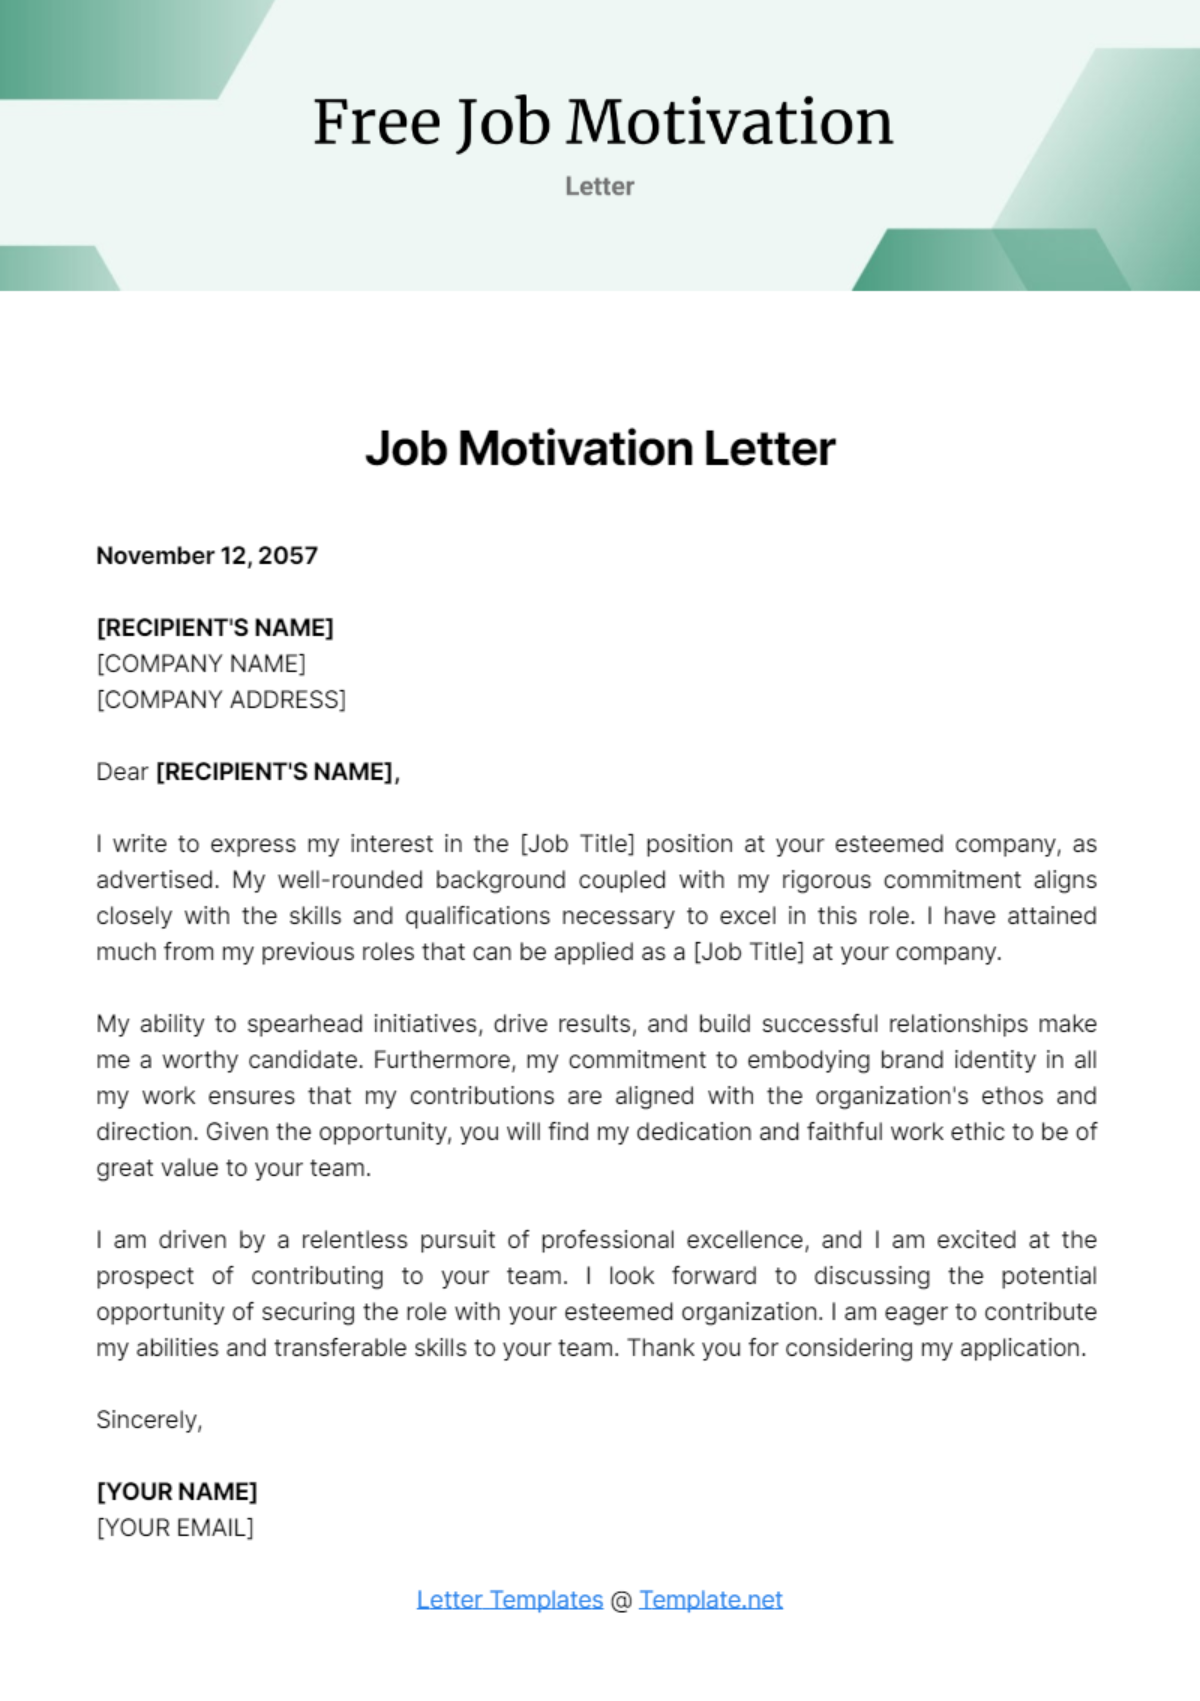 Job Motivation Letter Template